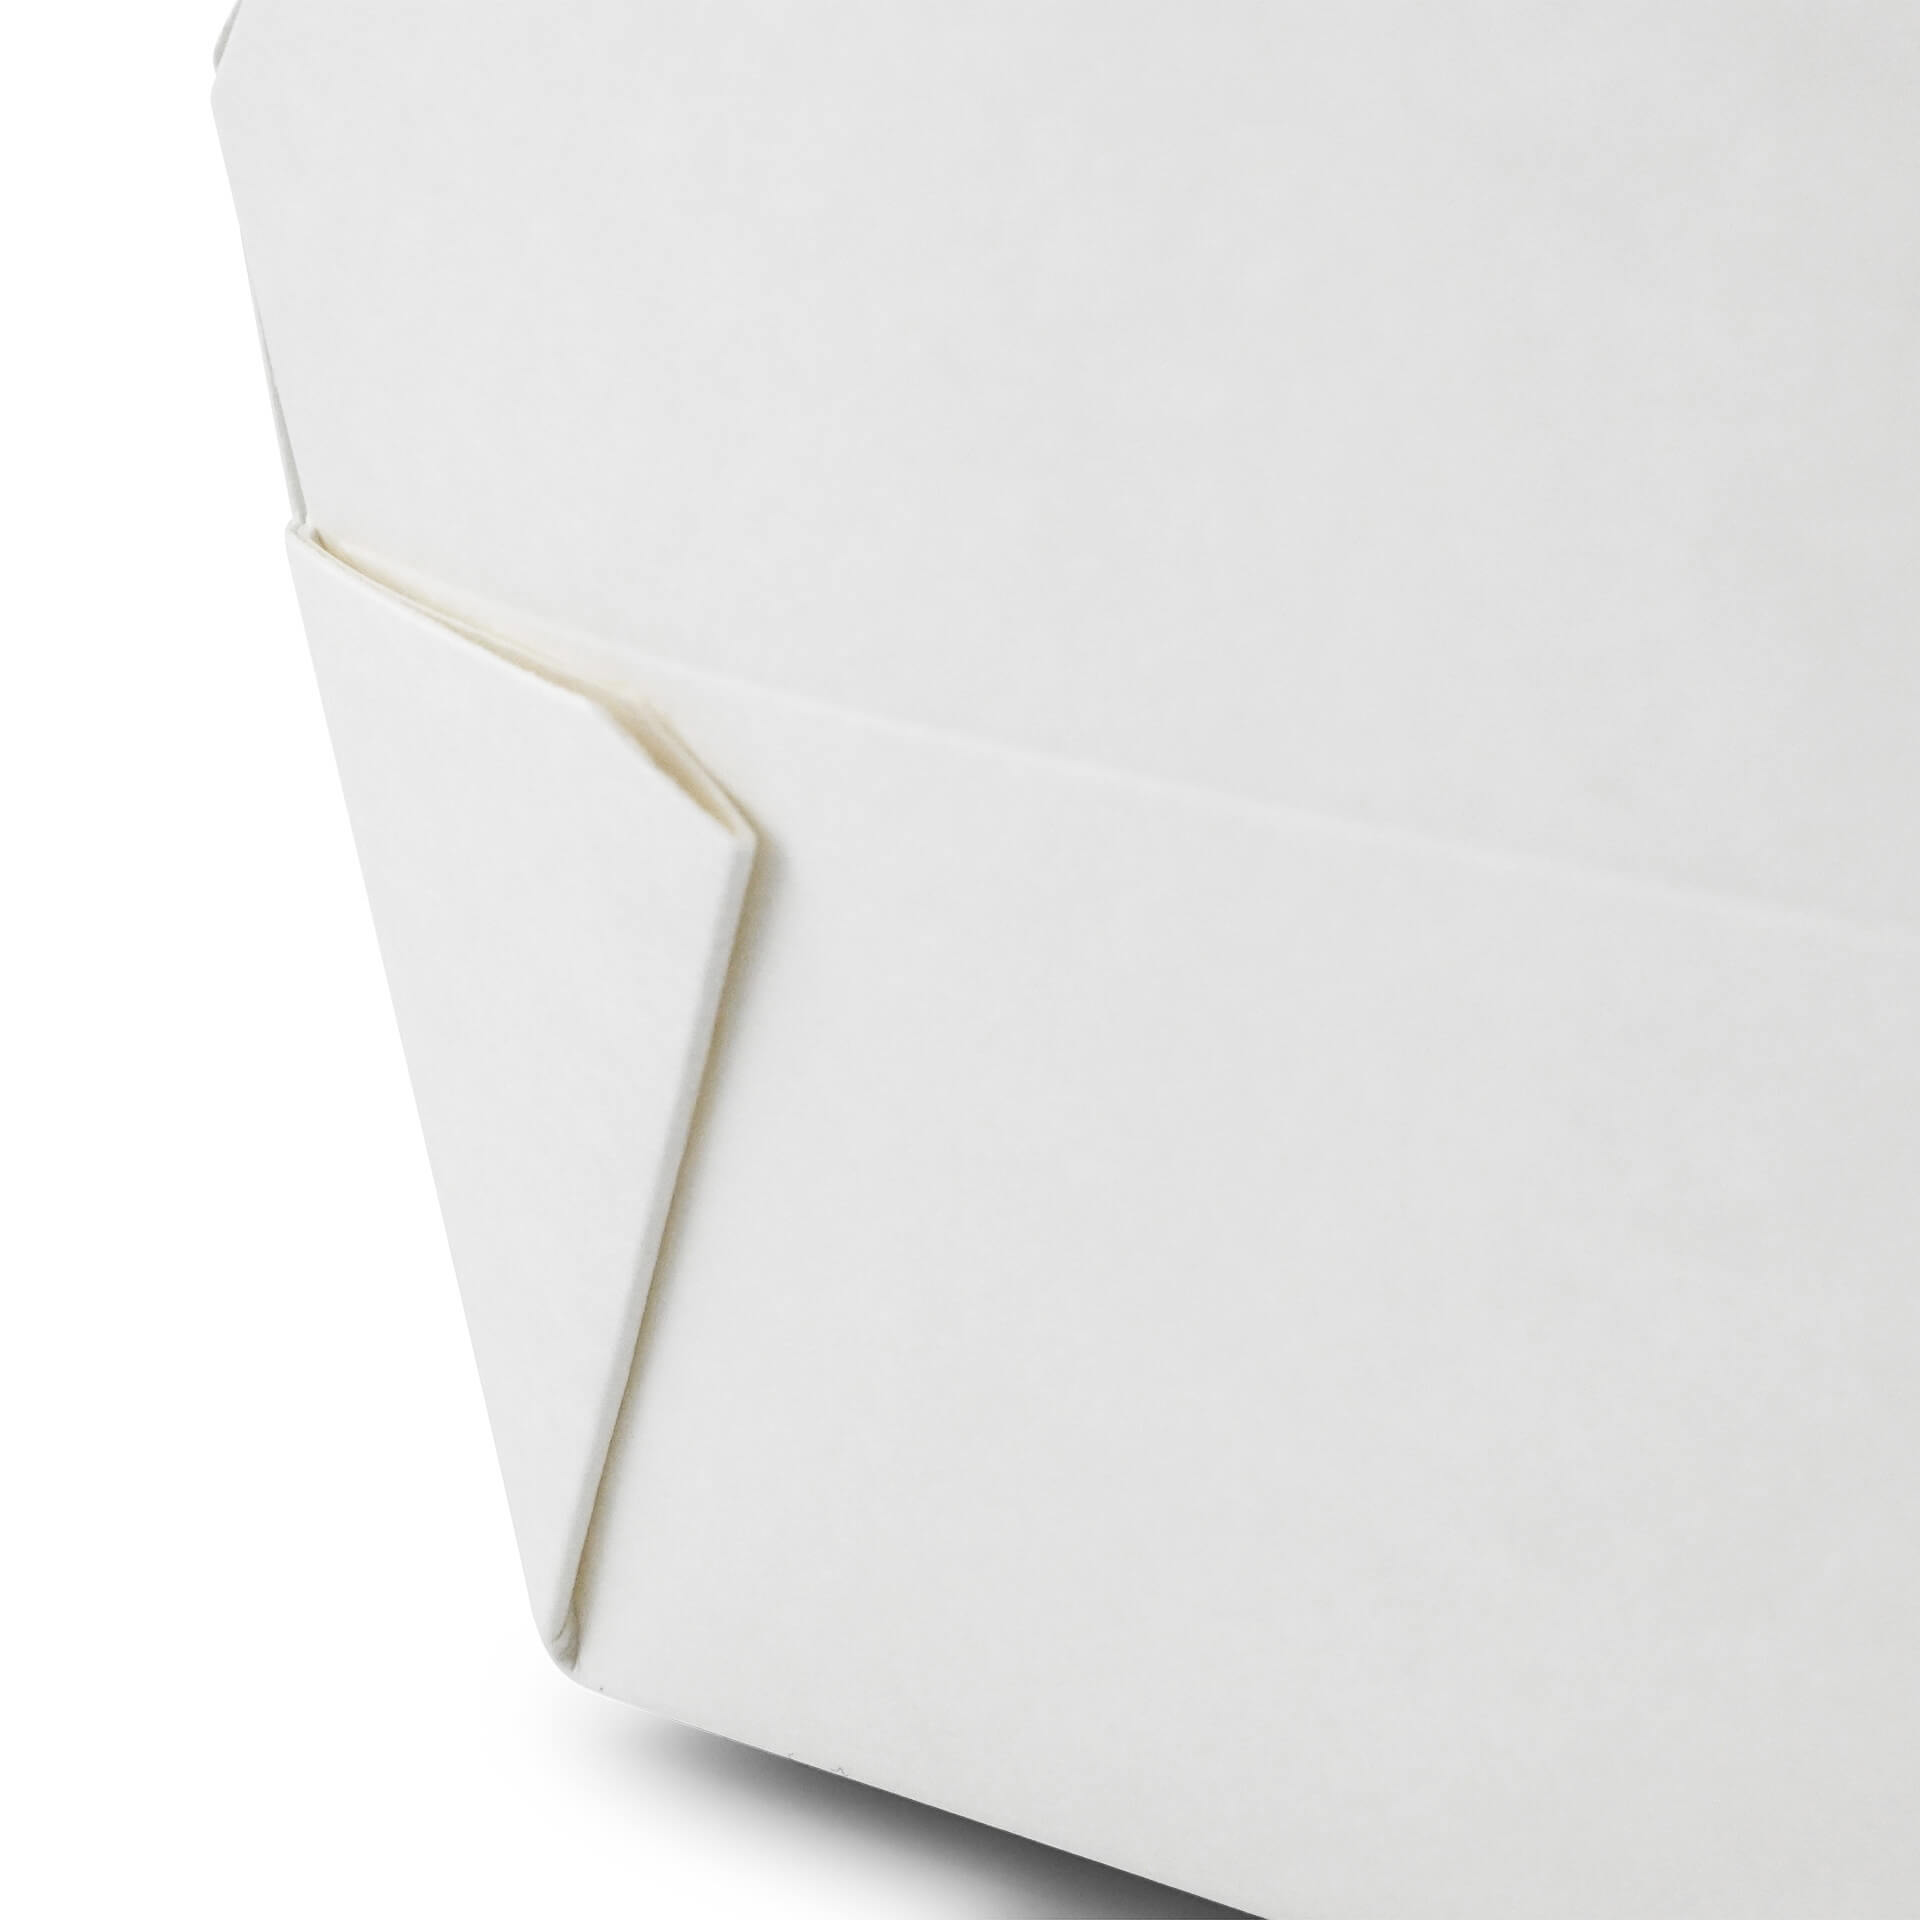 Take-away-Karton-Boxen 1150 ml, weiß, PE-beschichtet